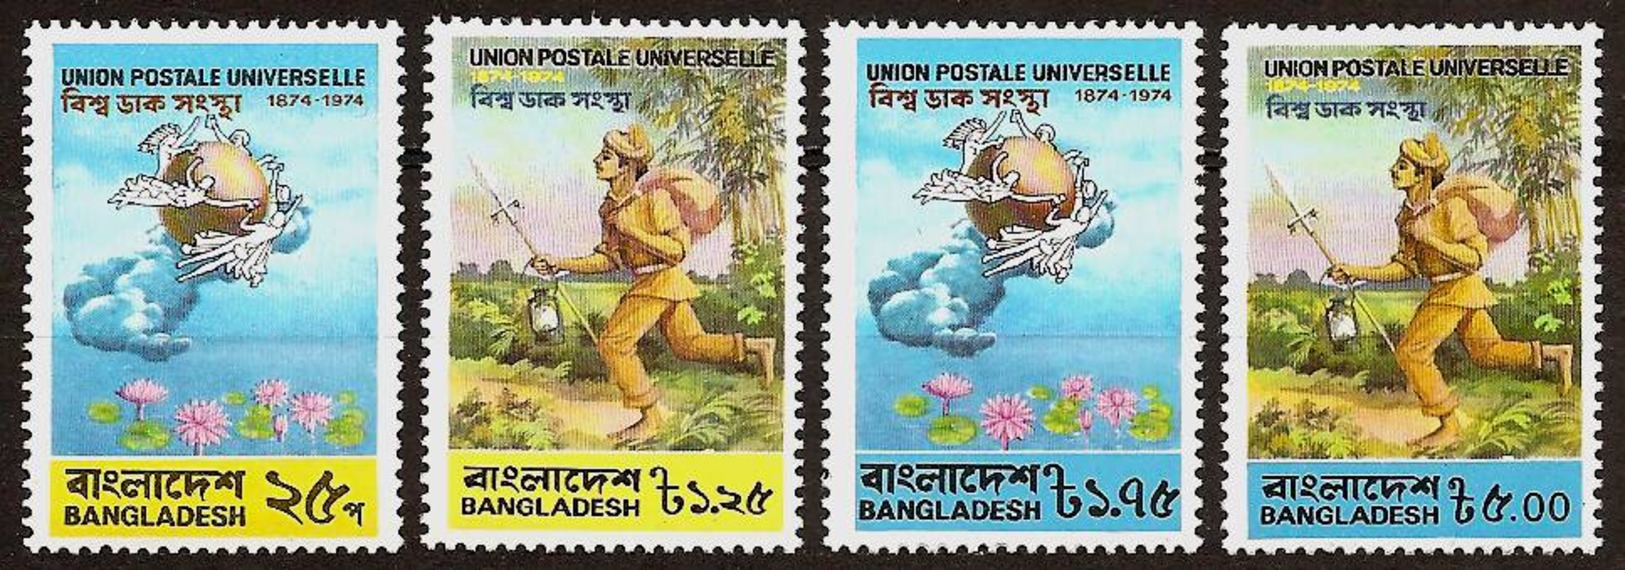 BANGLADESH 1974 - Centennial UPU / Universal Postal Union / Postmen - Mi 45-48 MNH ** Q595 - Bangladesh